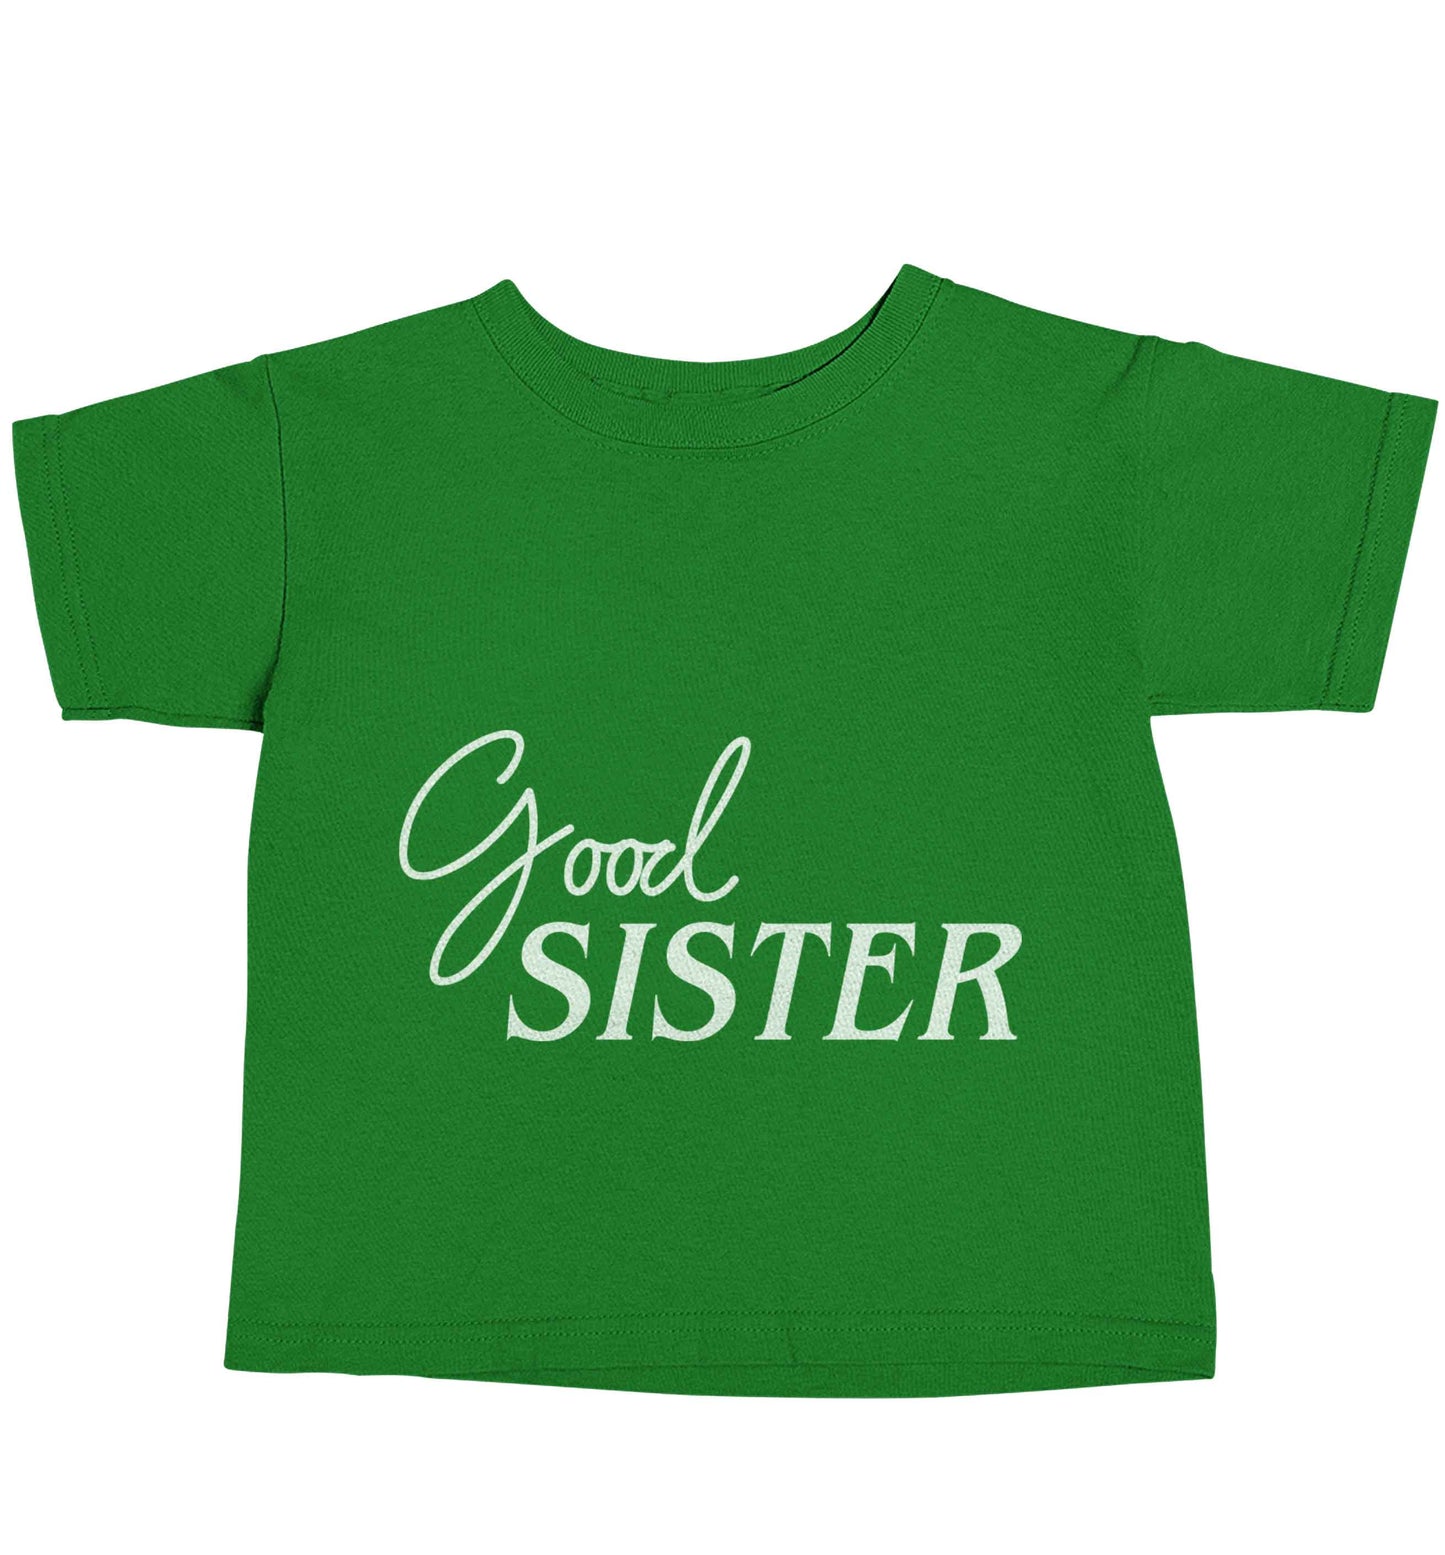 Good sister green baby toddler Tshirt 2 Years